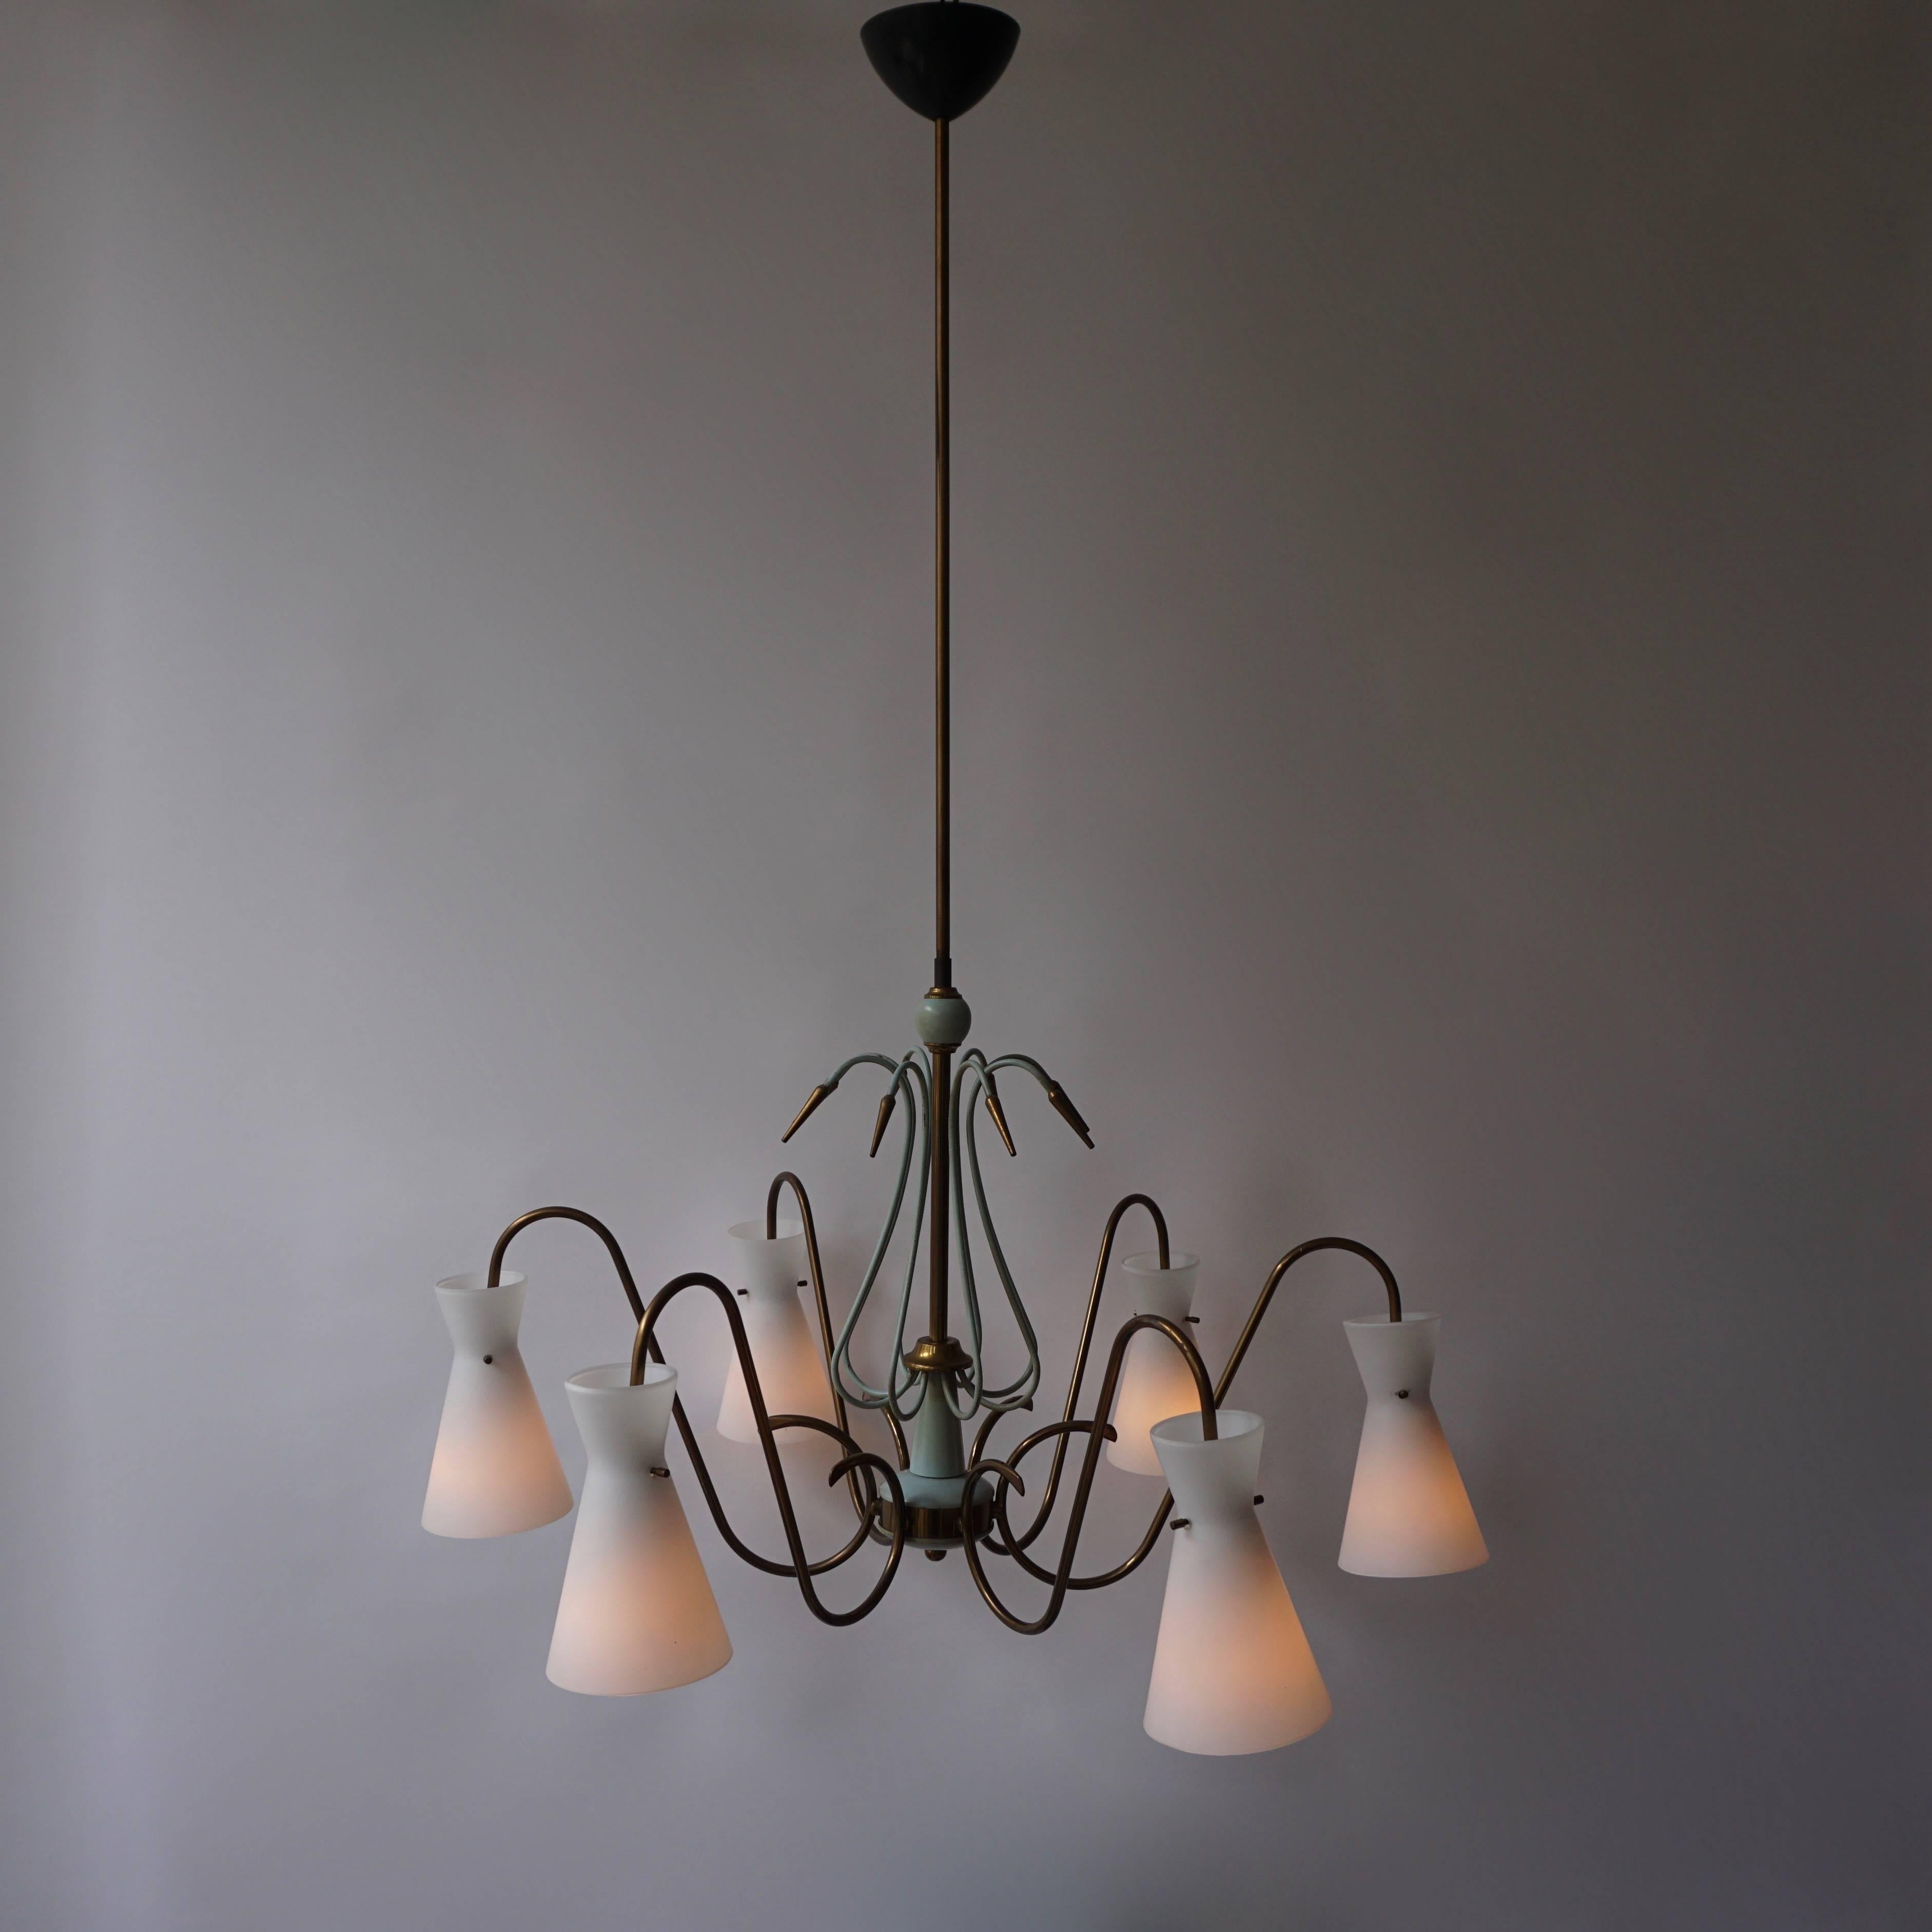 Italian chandelier with glass shades.
Measures: Diameter: 78 cm.
Height: 110 cm.
Six E14 bulbs.